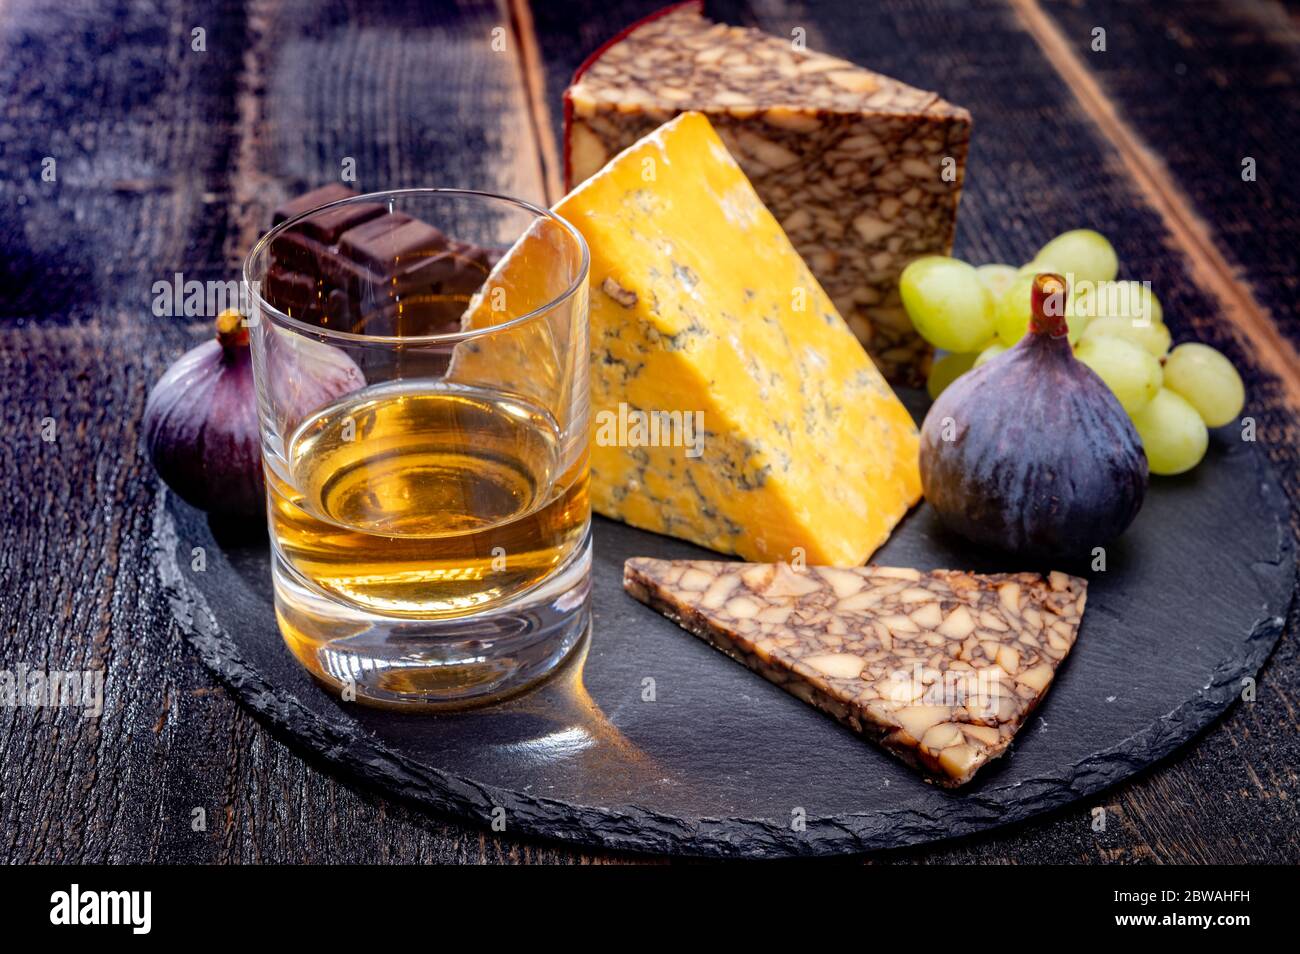 Tasting of Irish blended whiskey and cheeses from Ireland and UK, dark background Stock Photo